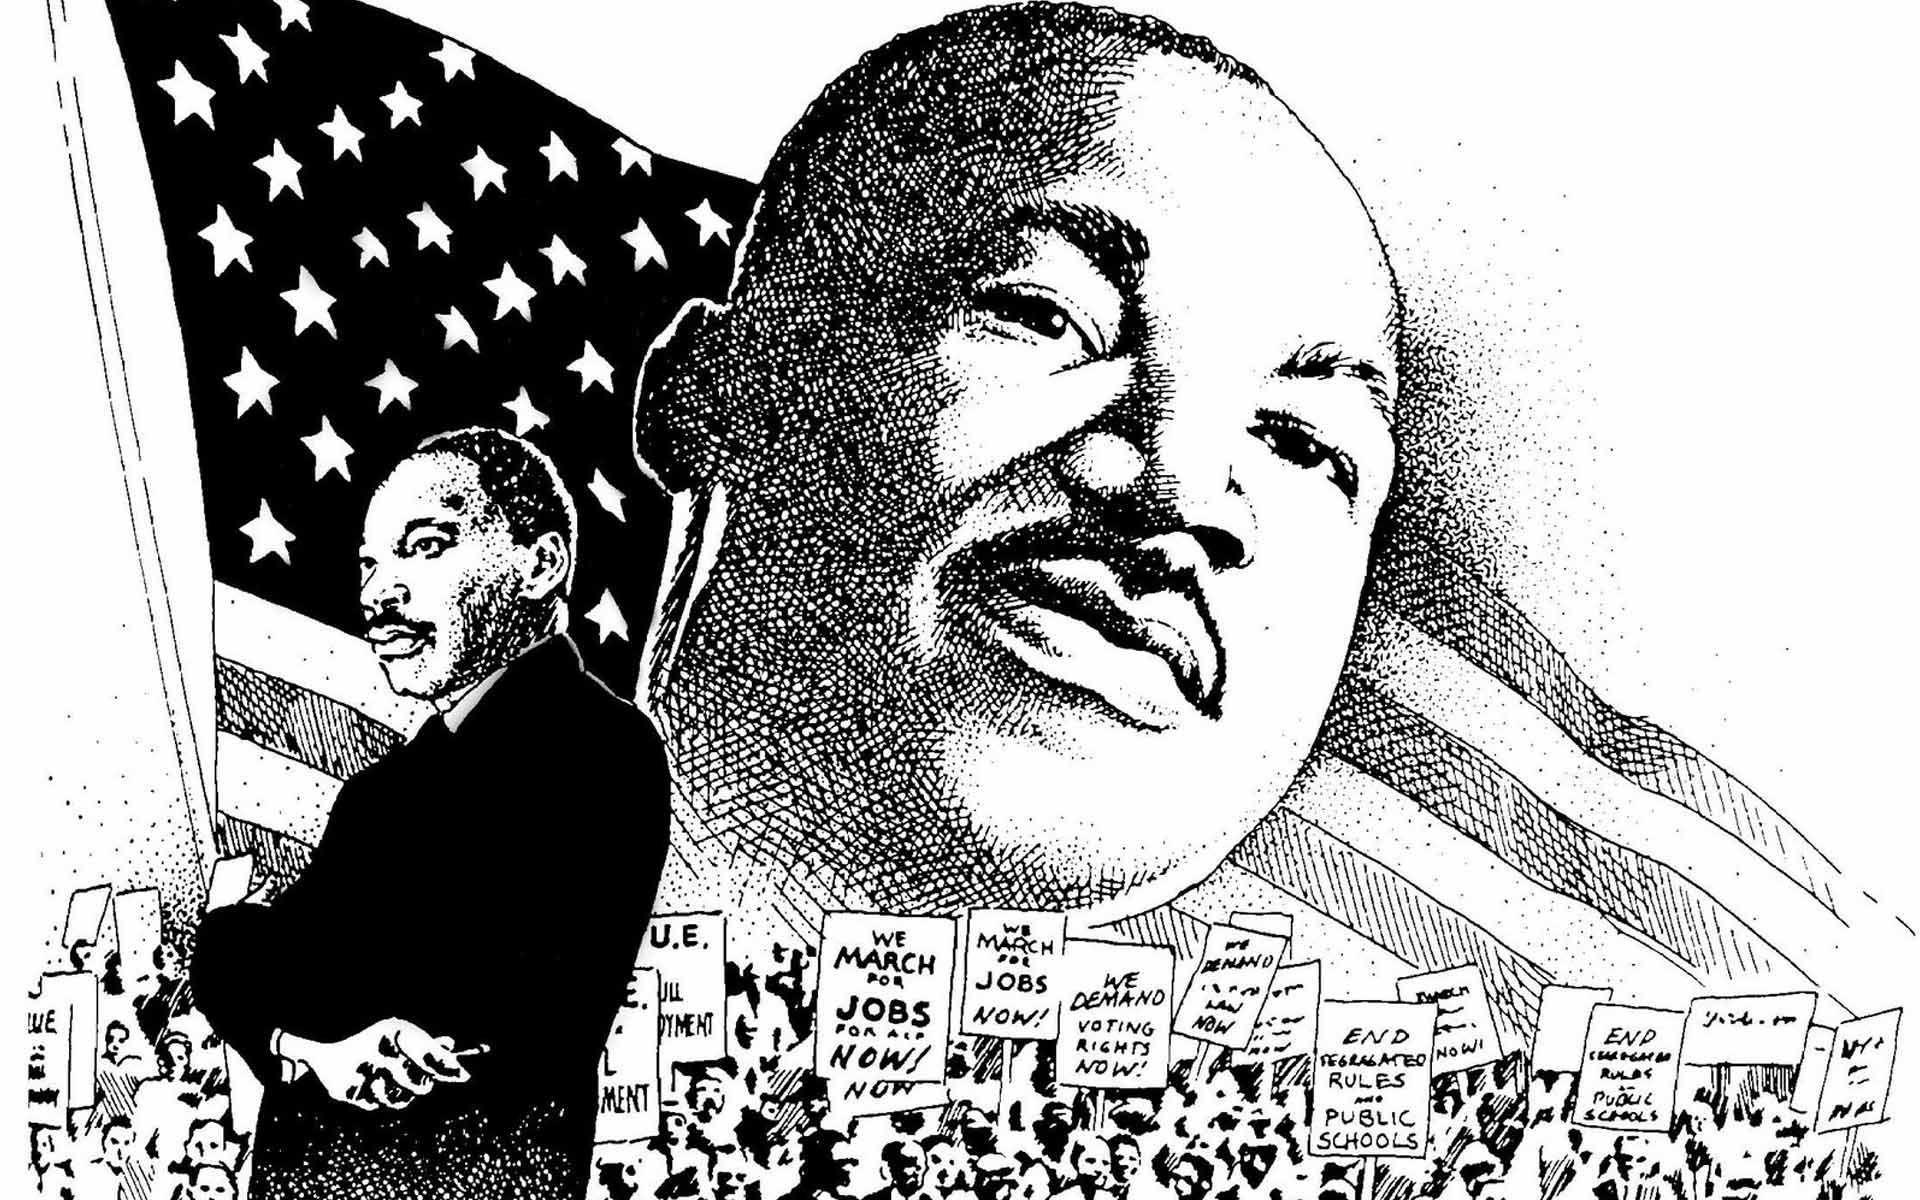 Martin Luther King Jr Day Wallpaper Background Image 1 for your Desktop